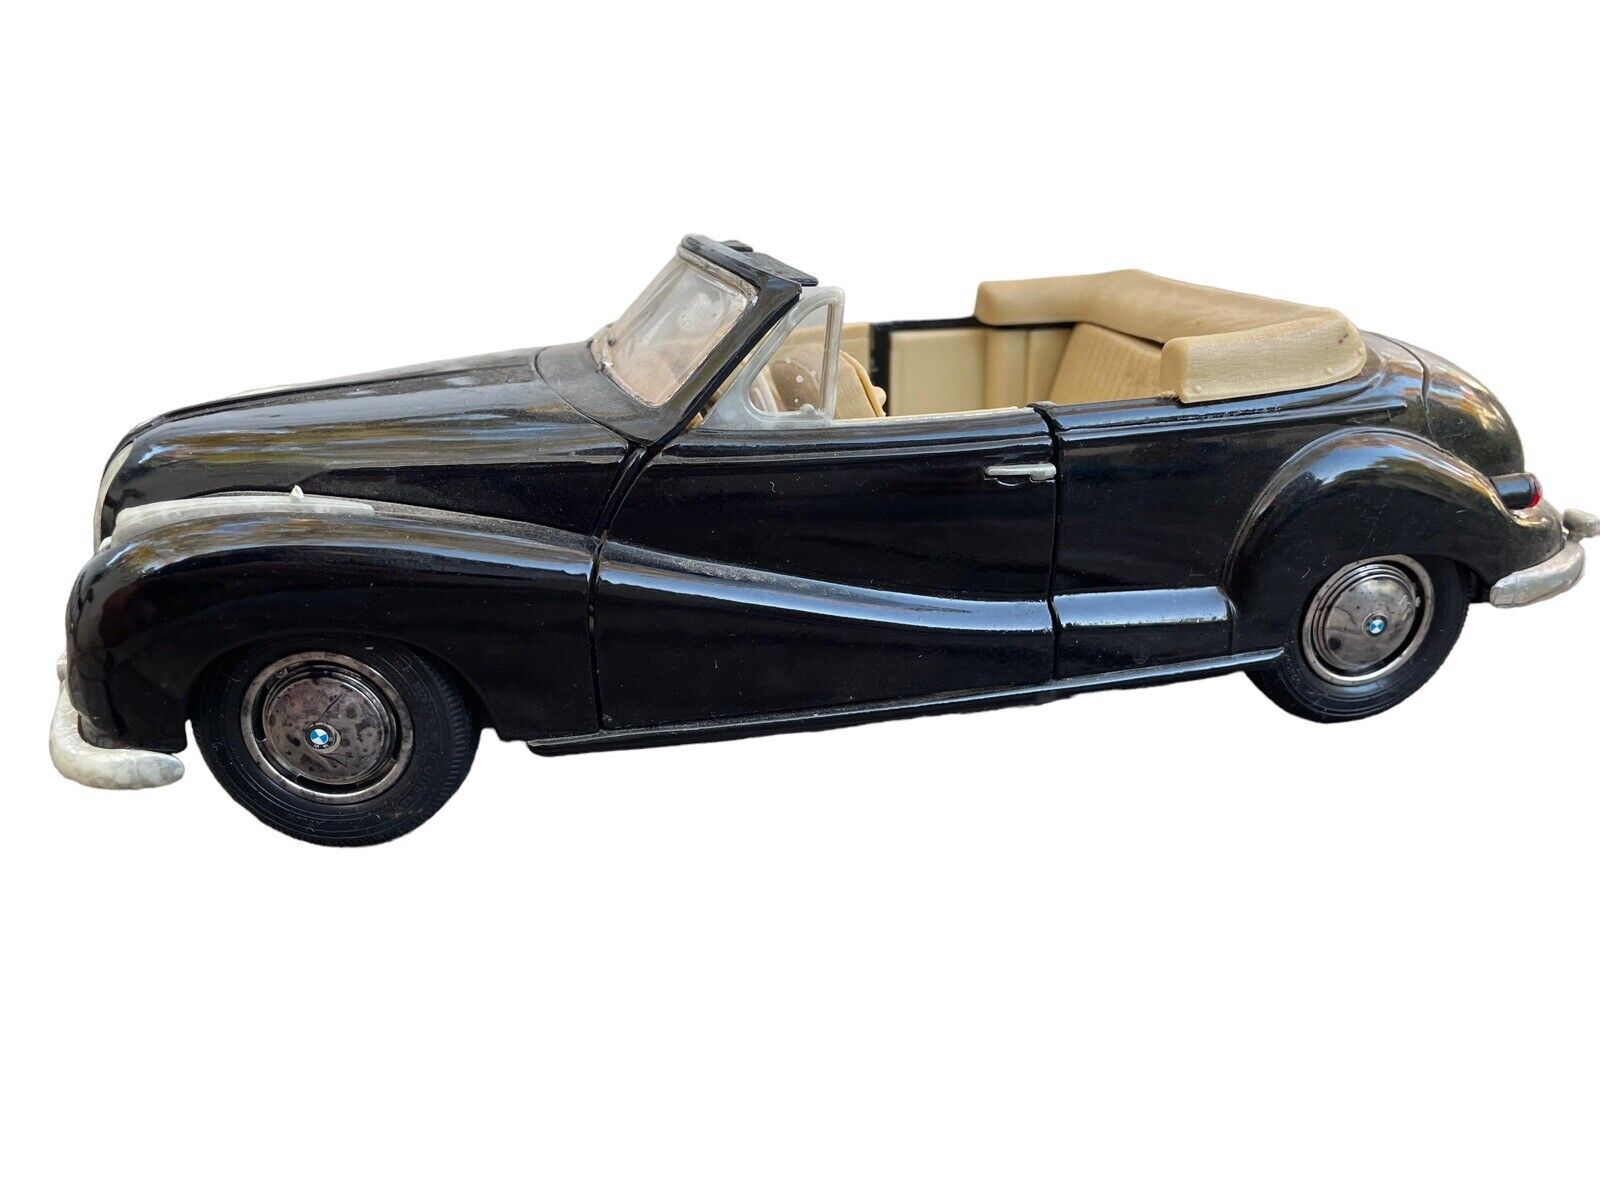 Maisto Special Edition 1:18 Scale Die Cast Model 1955 BMW 502 Vintage Diecast